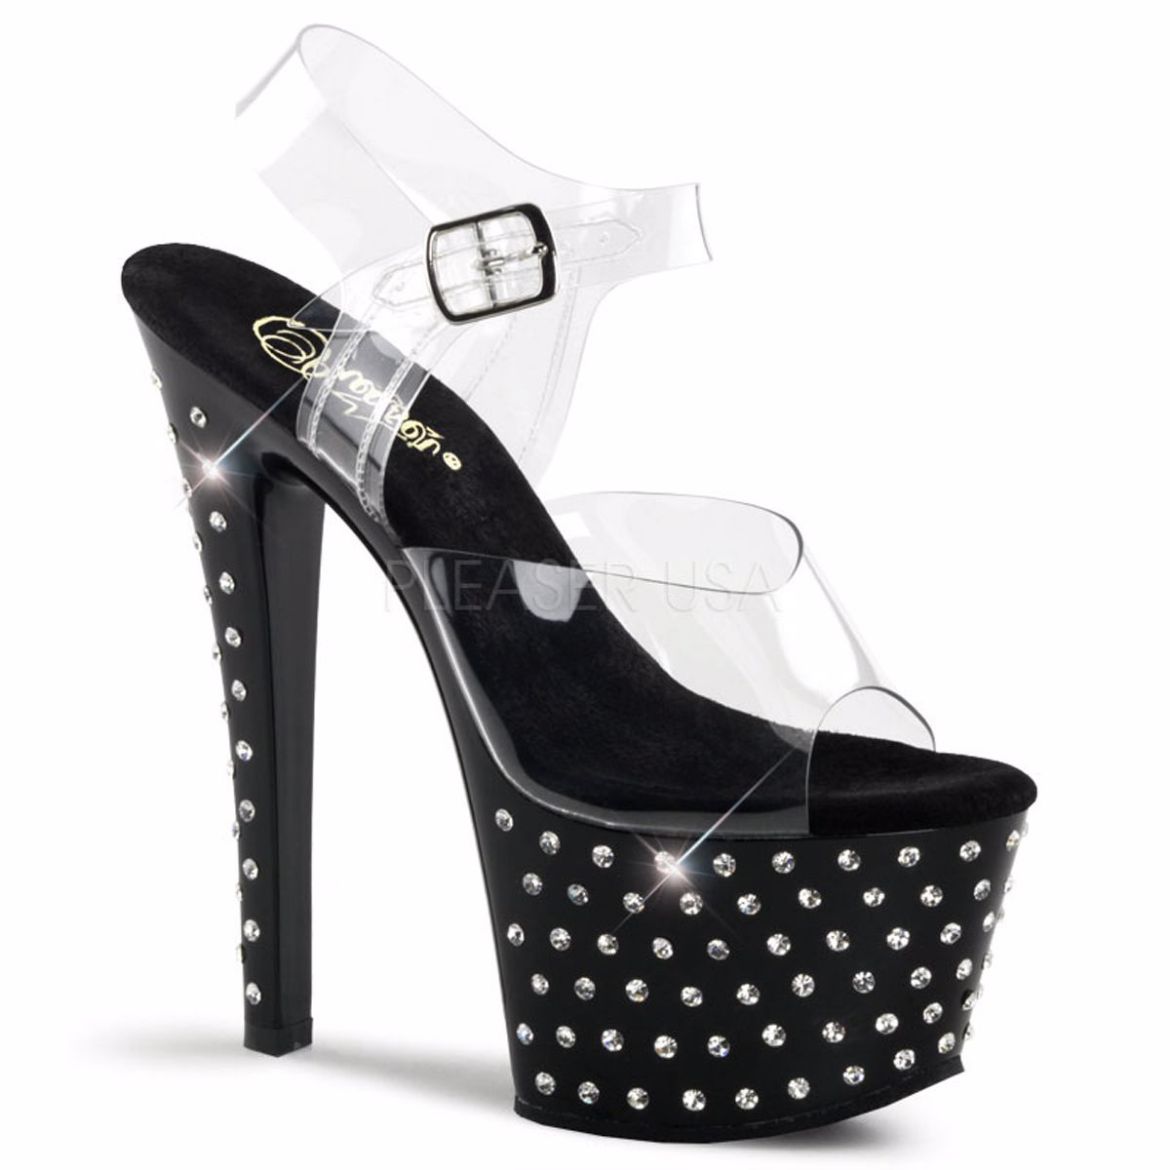 Product image of Pleaser Stardust-708 Clear/Black, 7 inch (17.8 cm) Heel, 2 3/4 inch (7 cm) Platform Sandal Shoes